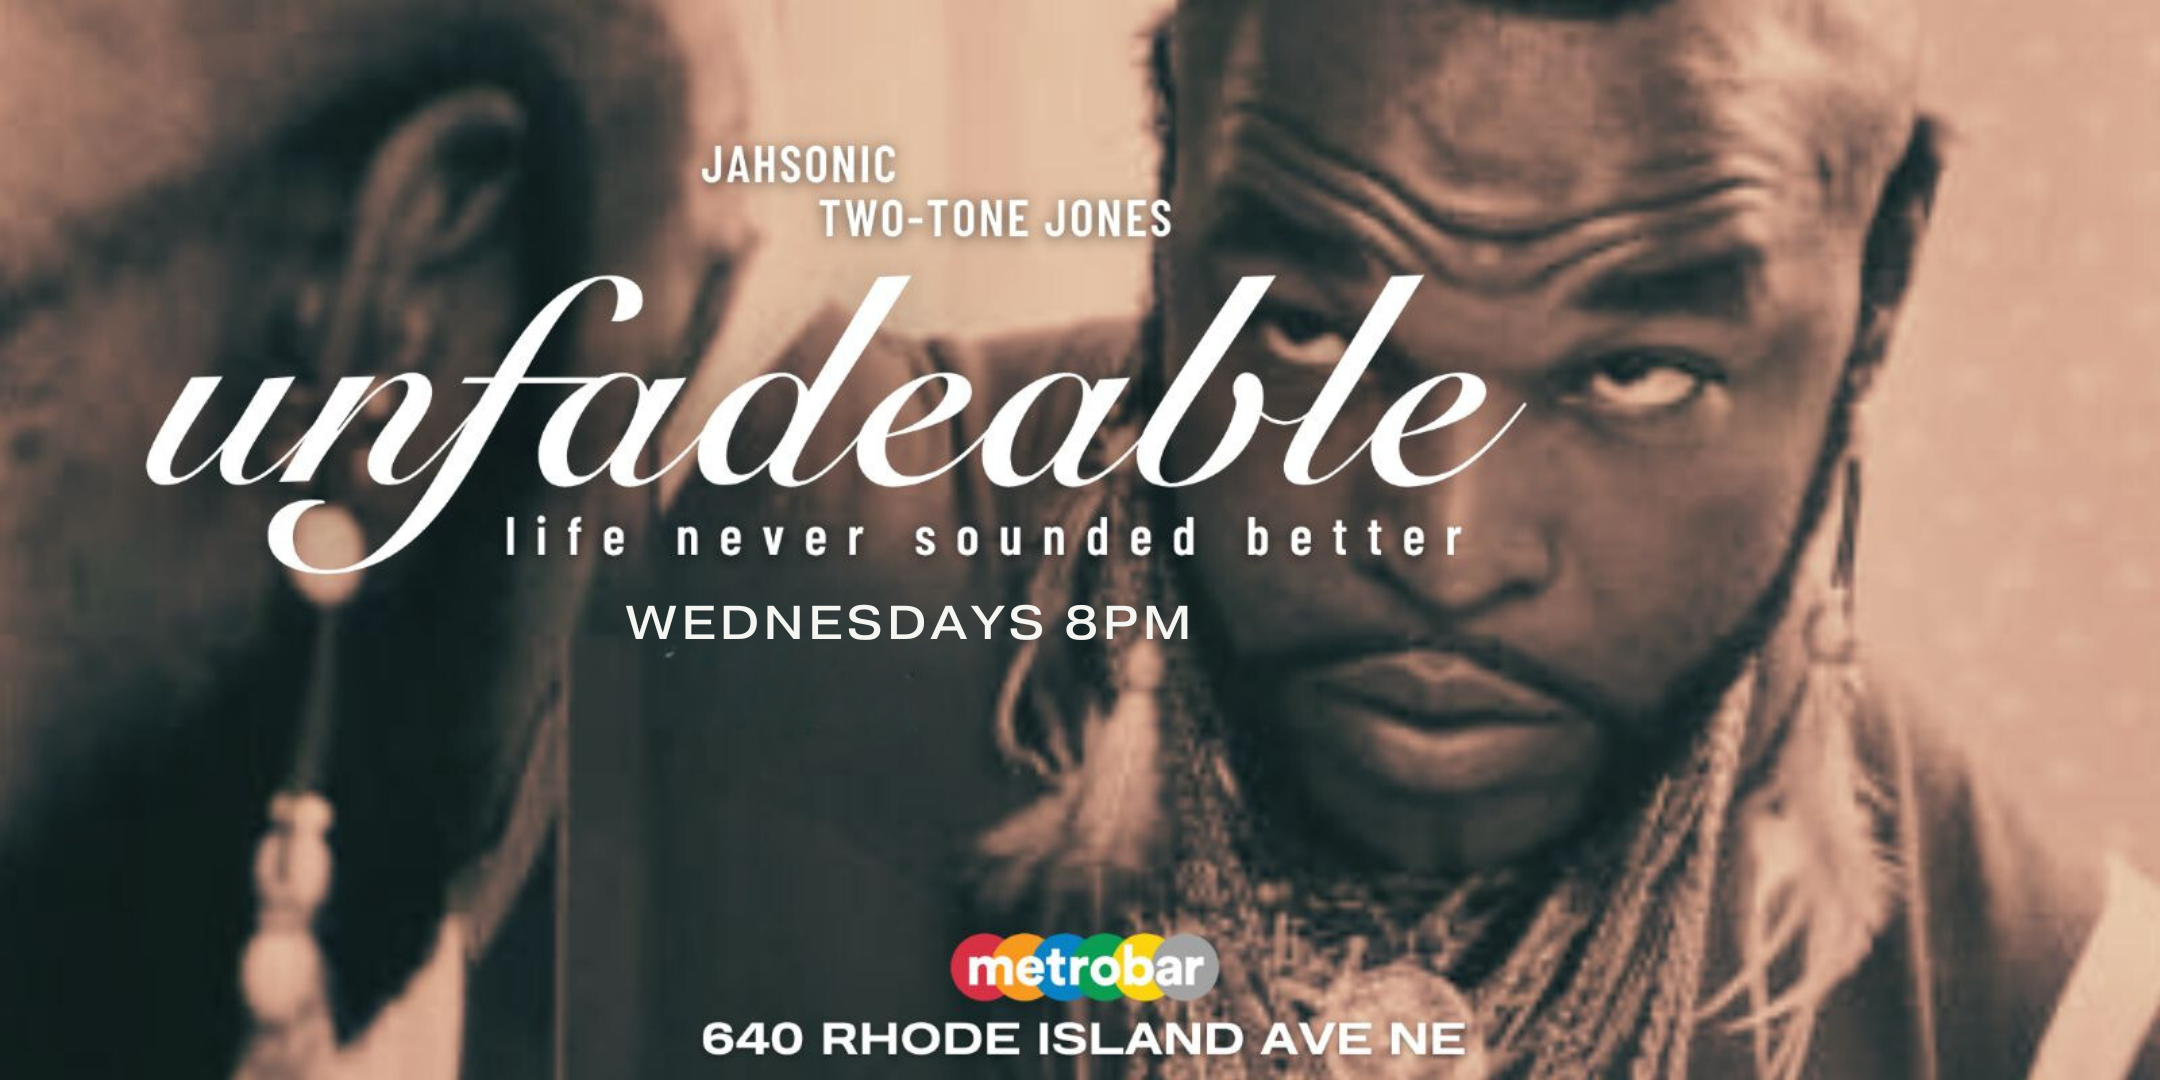 Jahsonic and 2-Tone Jones present Unfadeable